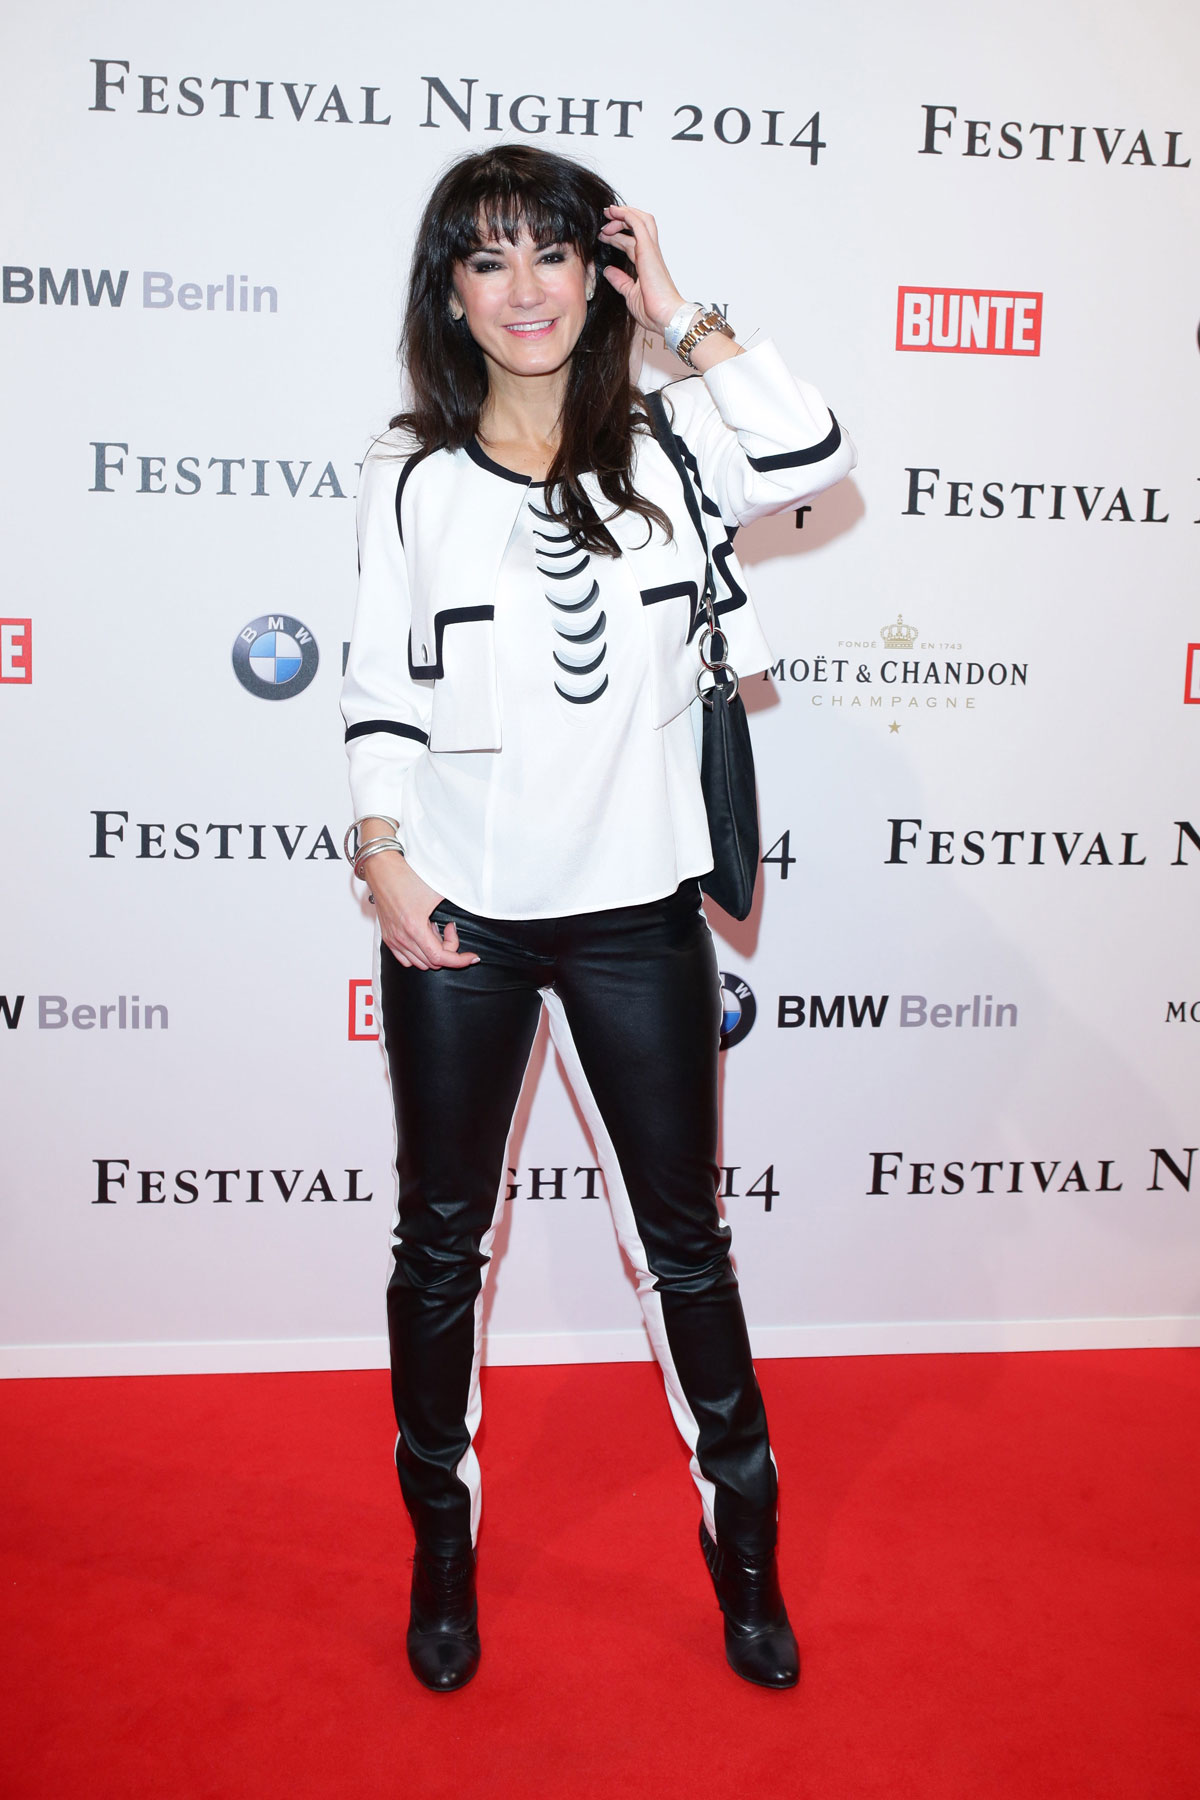 Mariella Ahrens attends the Bunte & BMW Festival Night